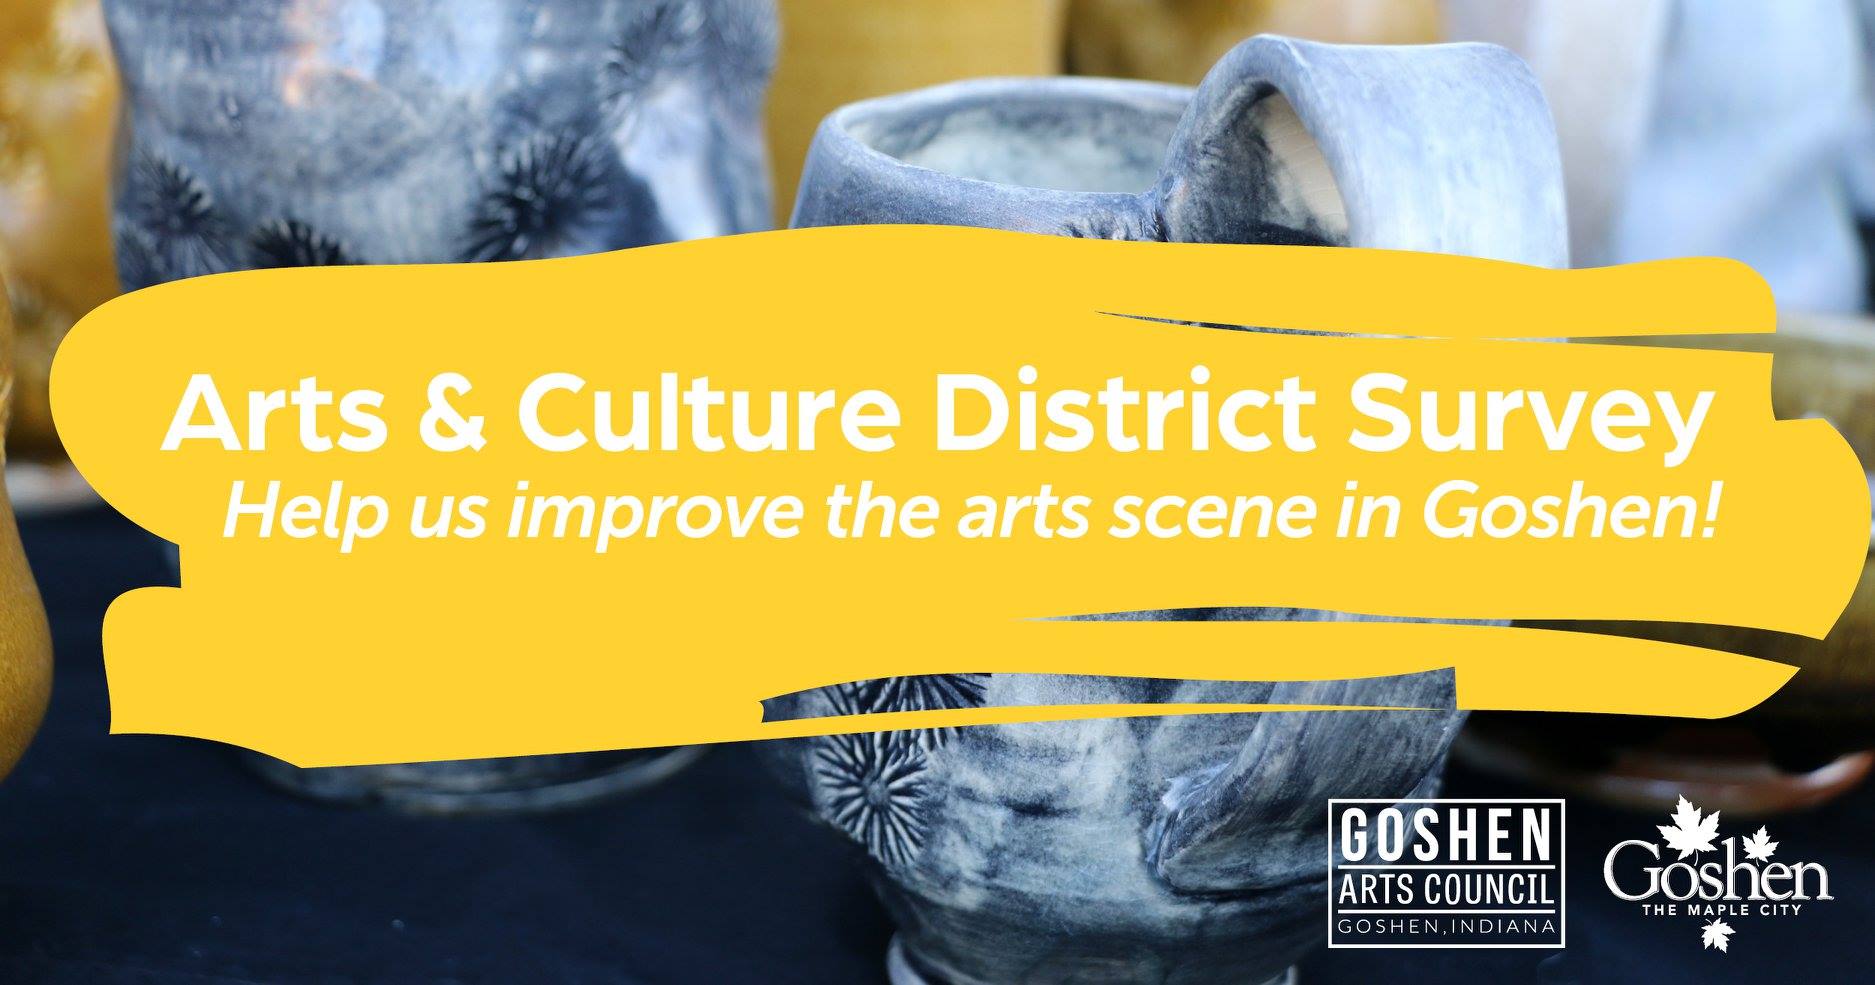 Take the Arts & Culture District Survey